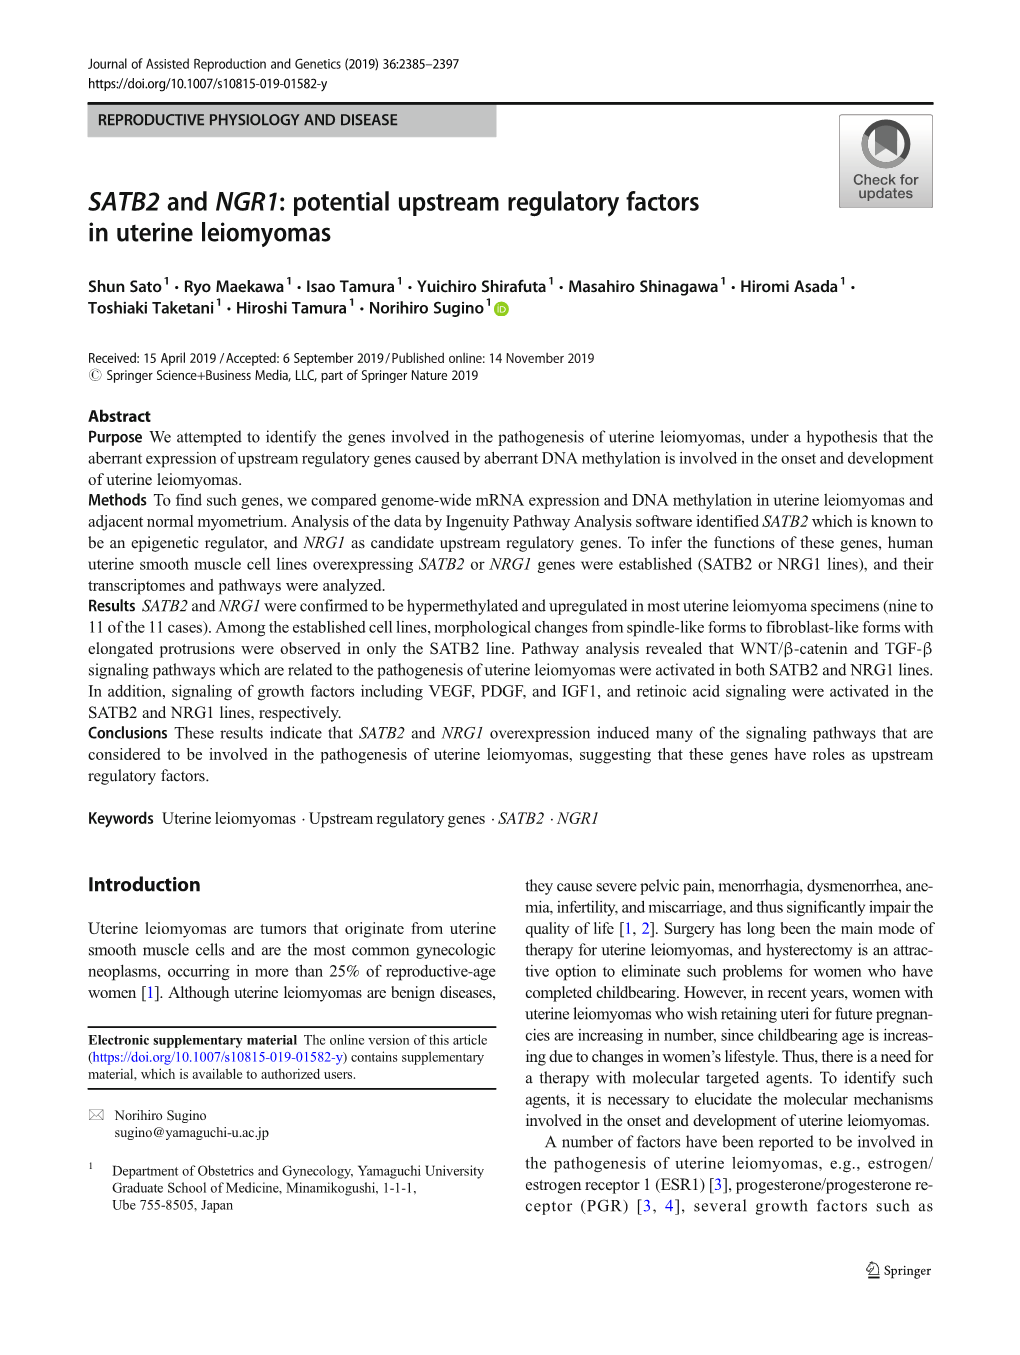 SATB2 and NGR1: Potential Upstream Regulatory Factors in Uterine Leiomyomas